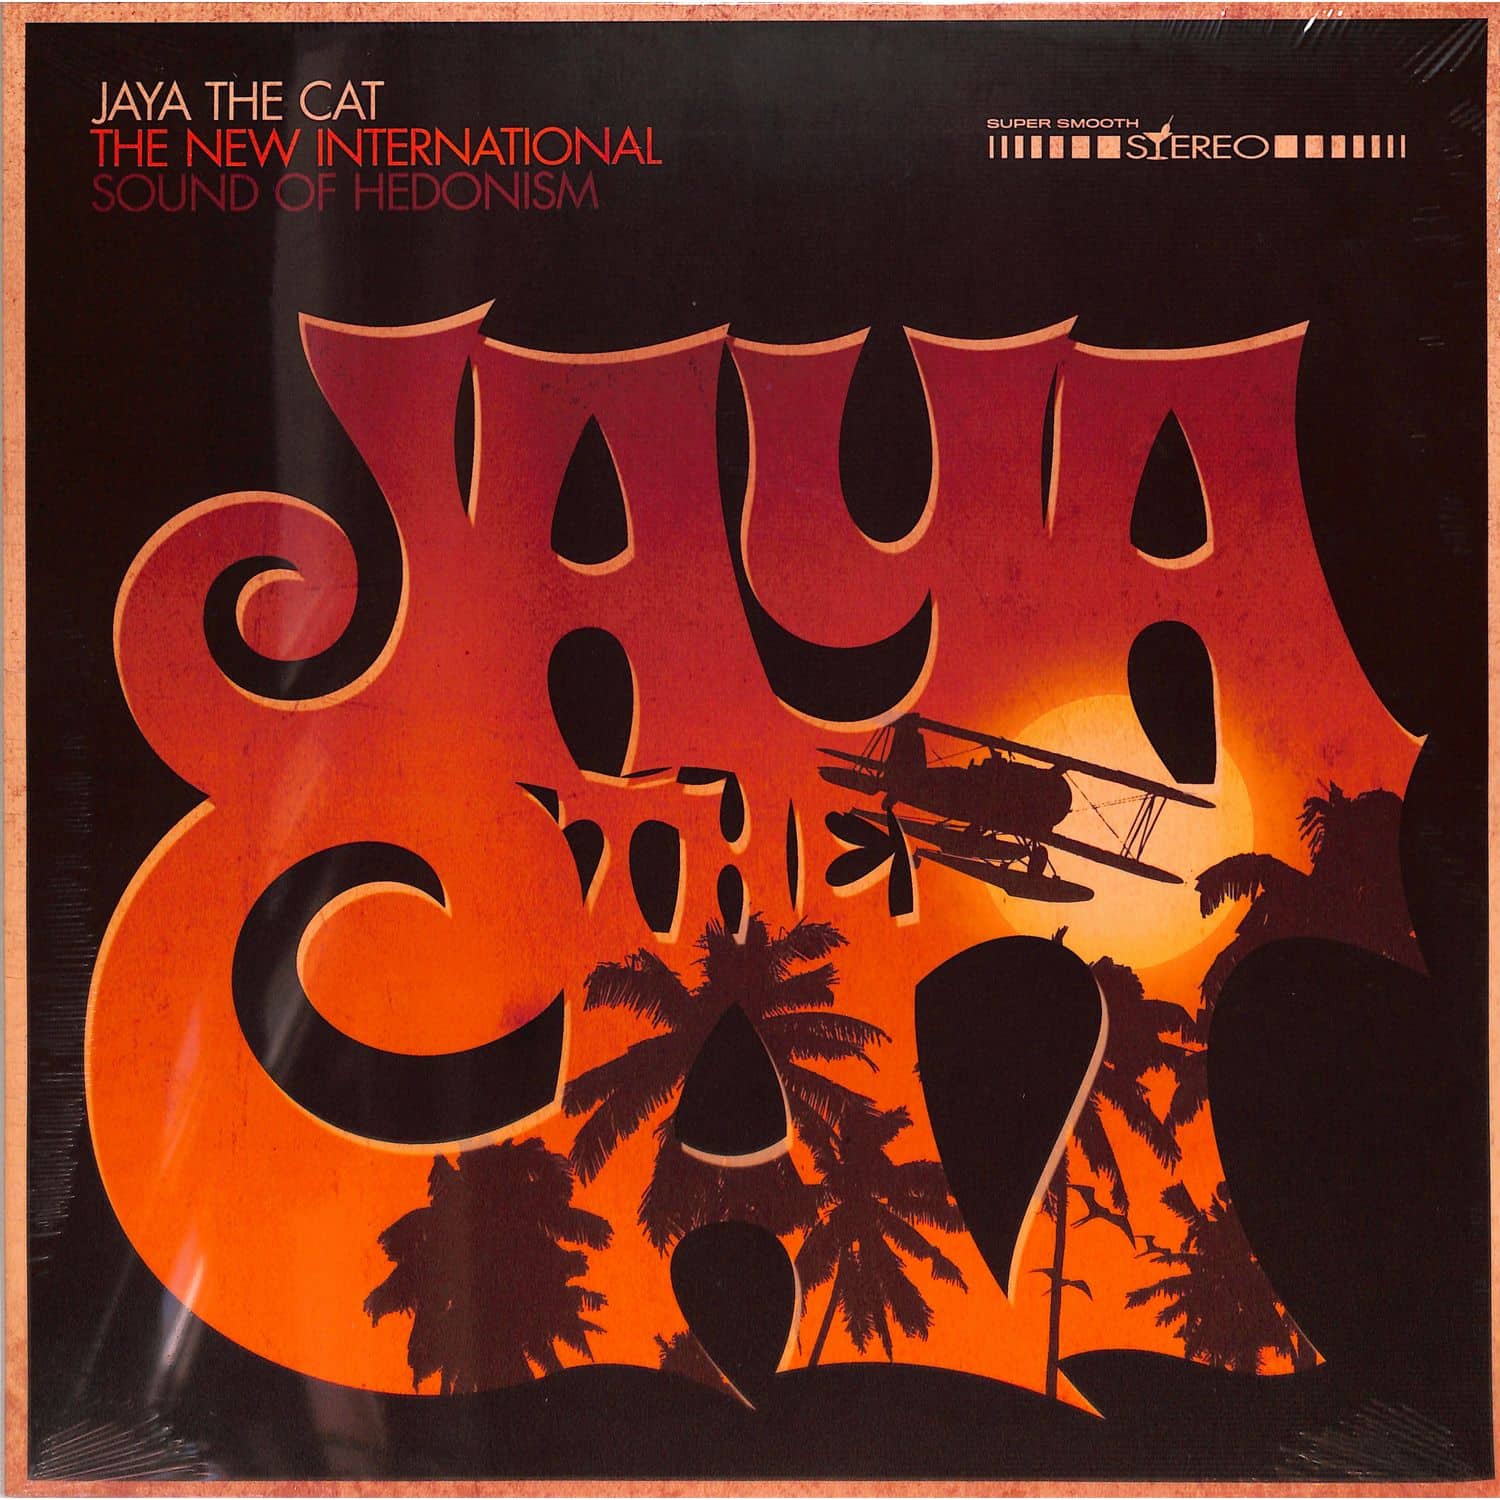 Jaya the Cat - THE NEW INTERNATIONAL SOUND OF HEDONISM 